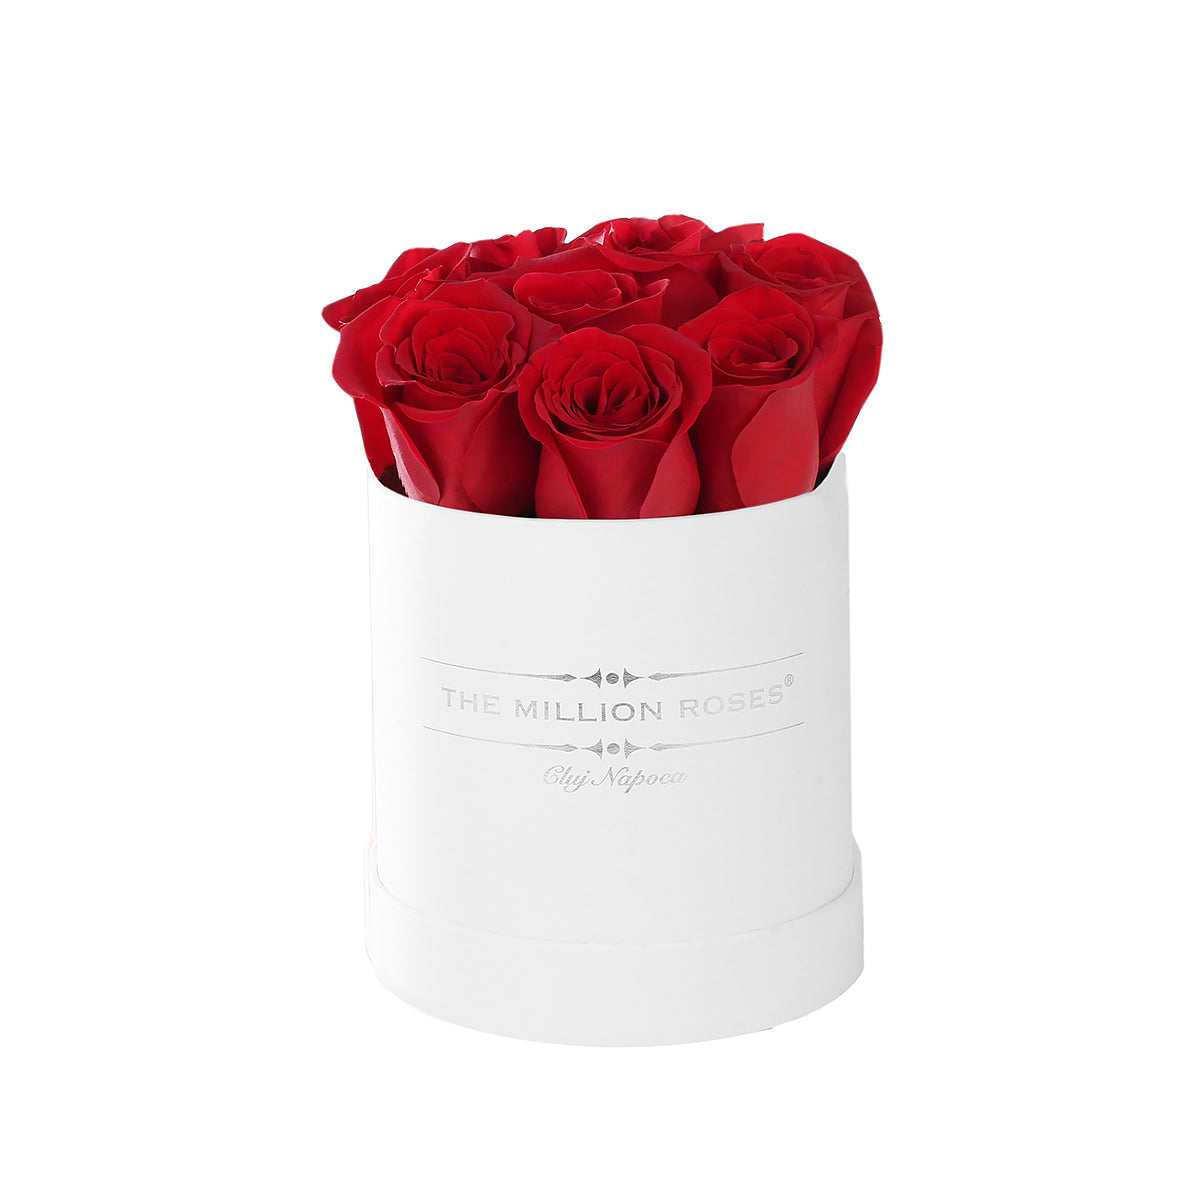 buchete trandafiri in cutie, buchete trandafiri naturali in cutie, trandafiri naturali, trandafiri rosii, trandafiri in cutie alba, 